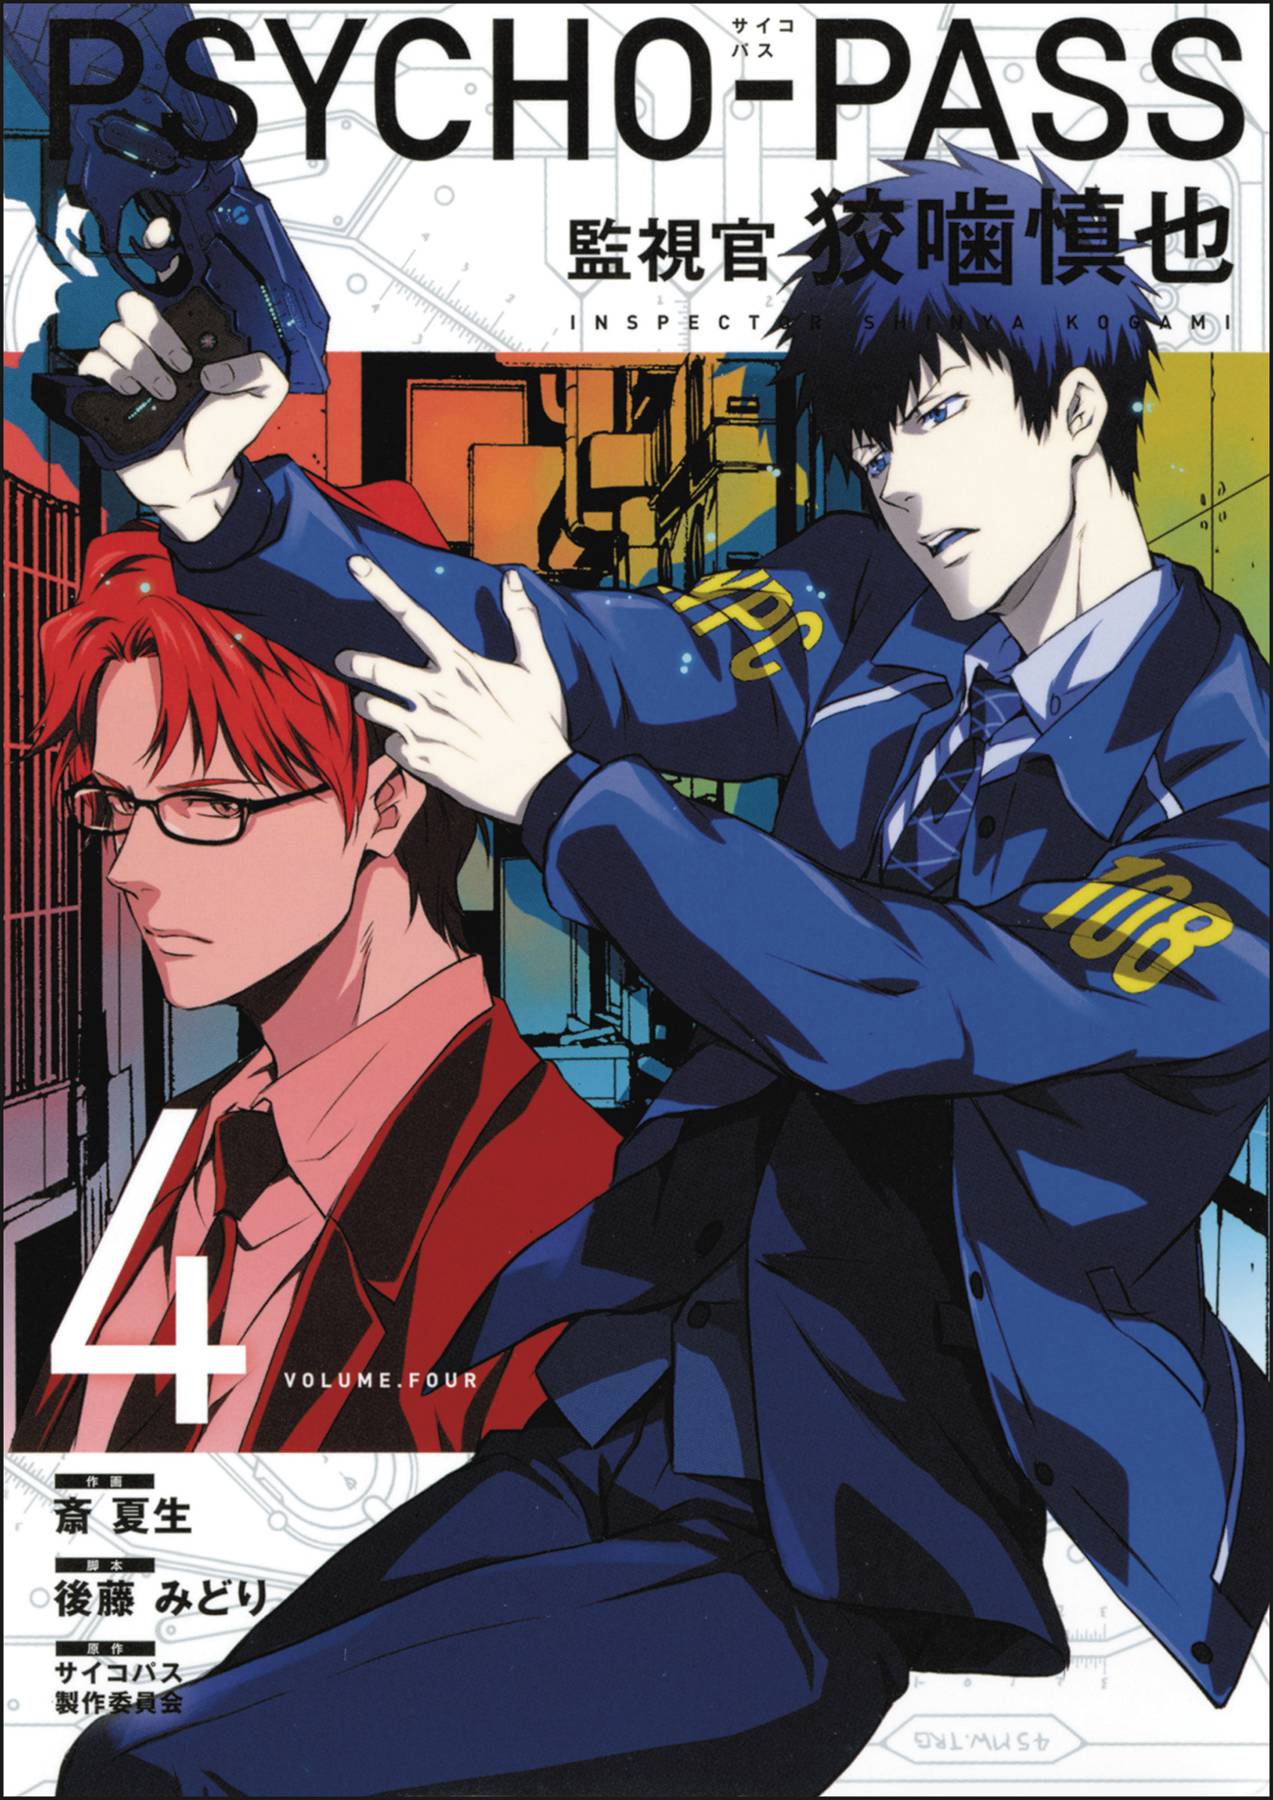 Psycho Pass Inspector Shinya Kogami Graphic Novel Volume 4